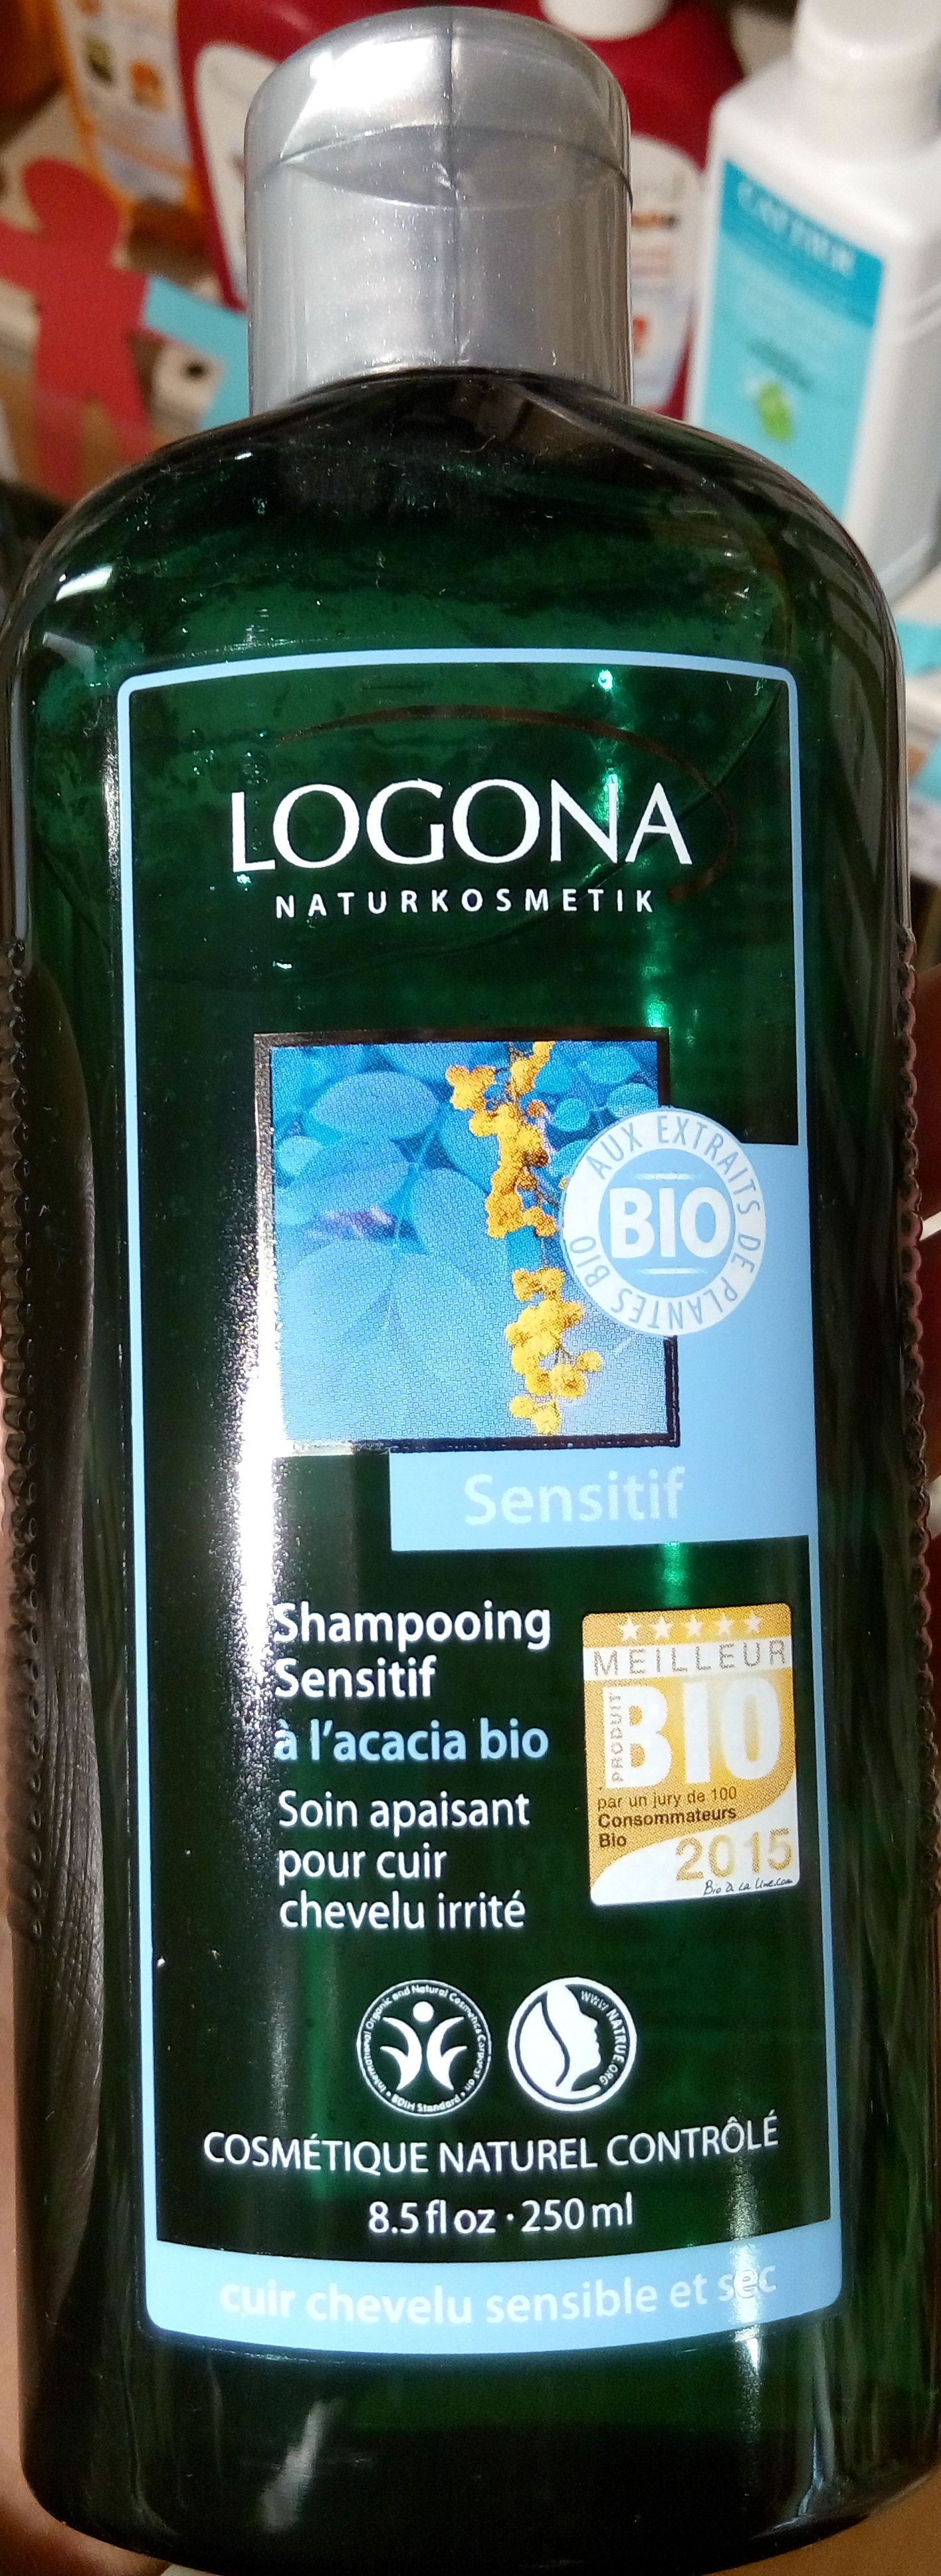 Shampooing sensitif à l'acacia bio - Produit - fr